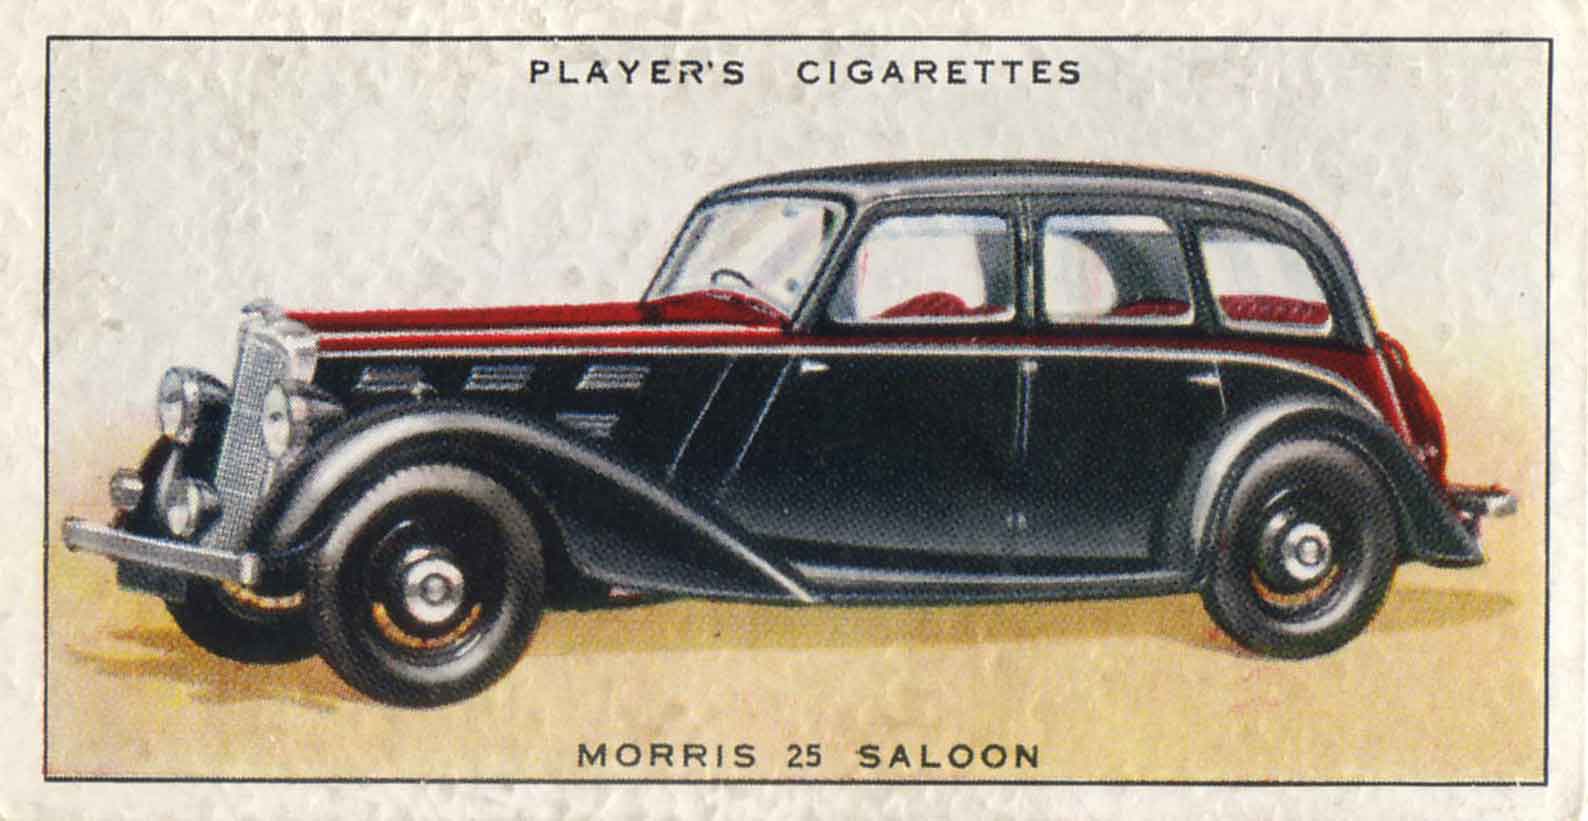 Morris 25 Saloon. 1937 cigarette card.